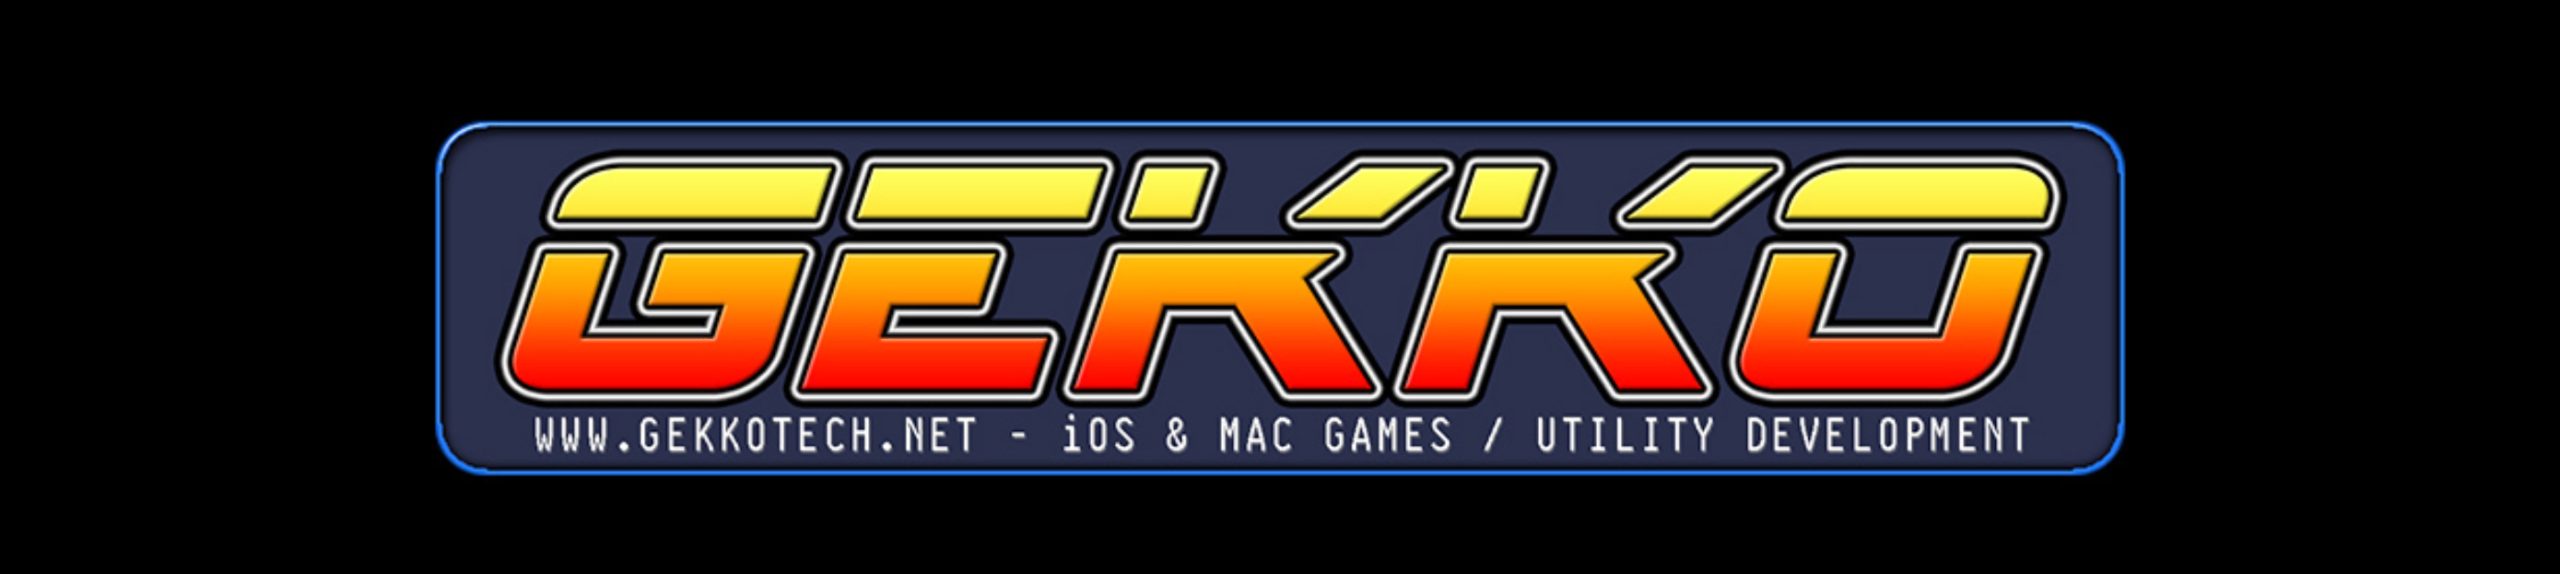 Logo del emulador de C64 Gekko